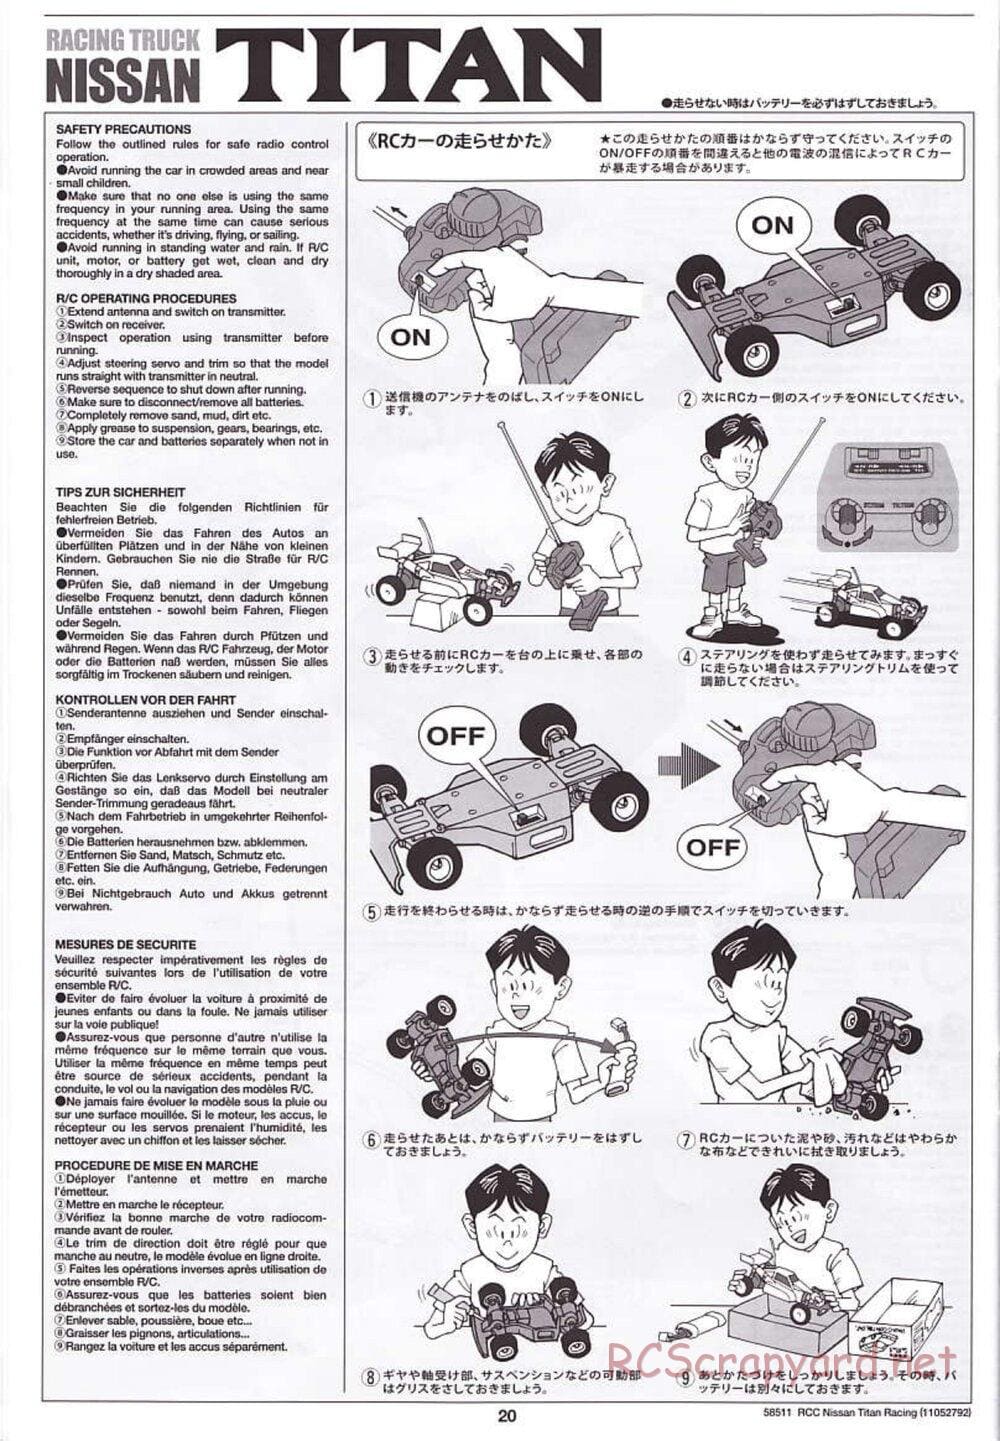 Tamiya - Nissan Titan Chassis - Manual - Page 20